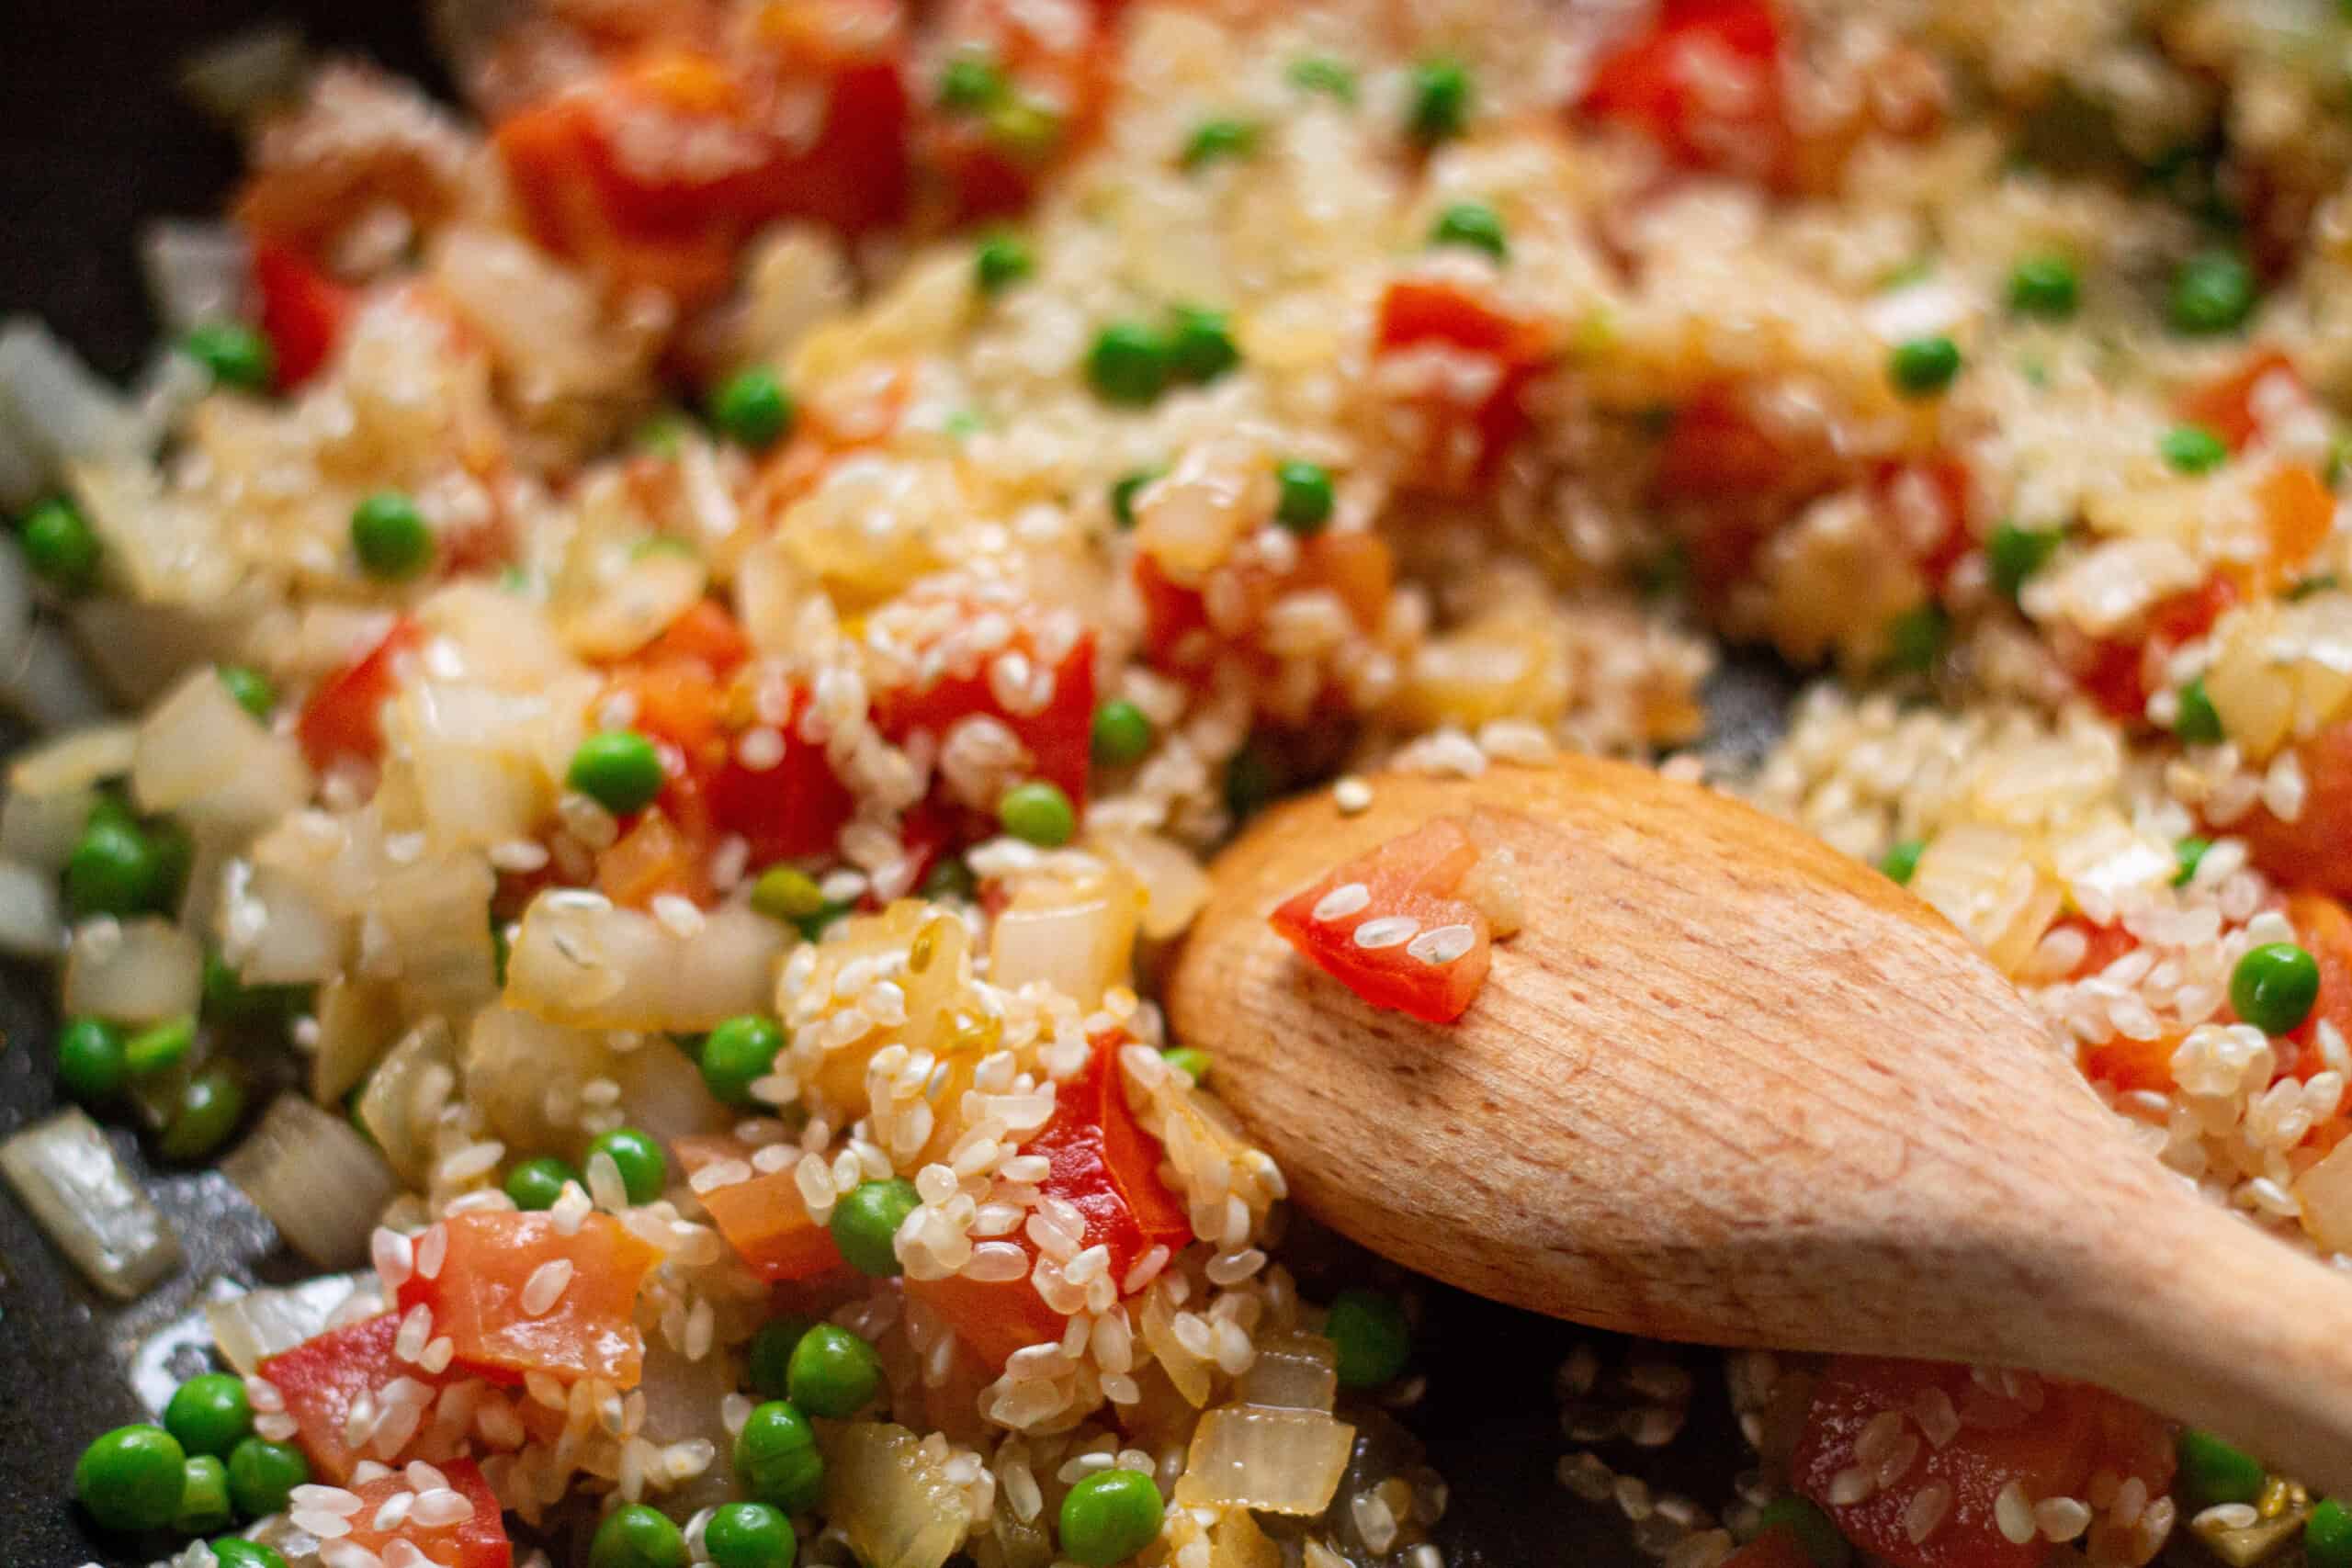 paella method , adding the rice